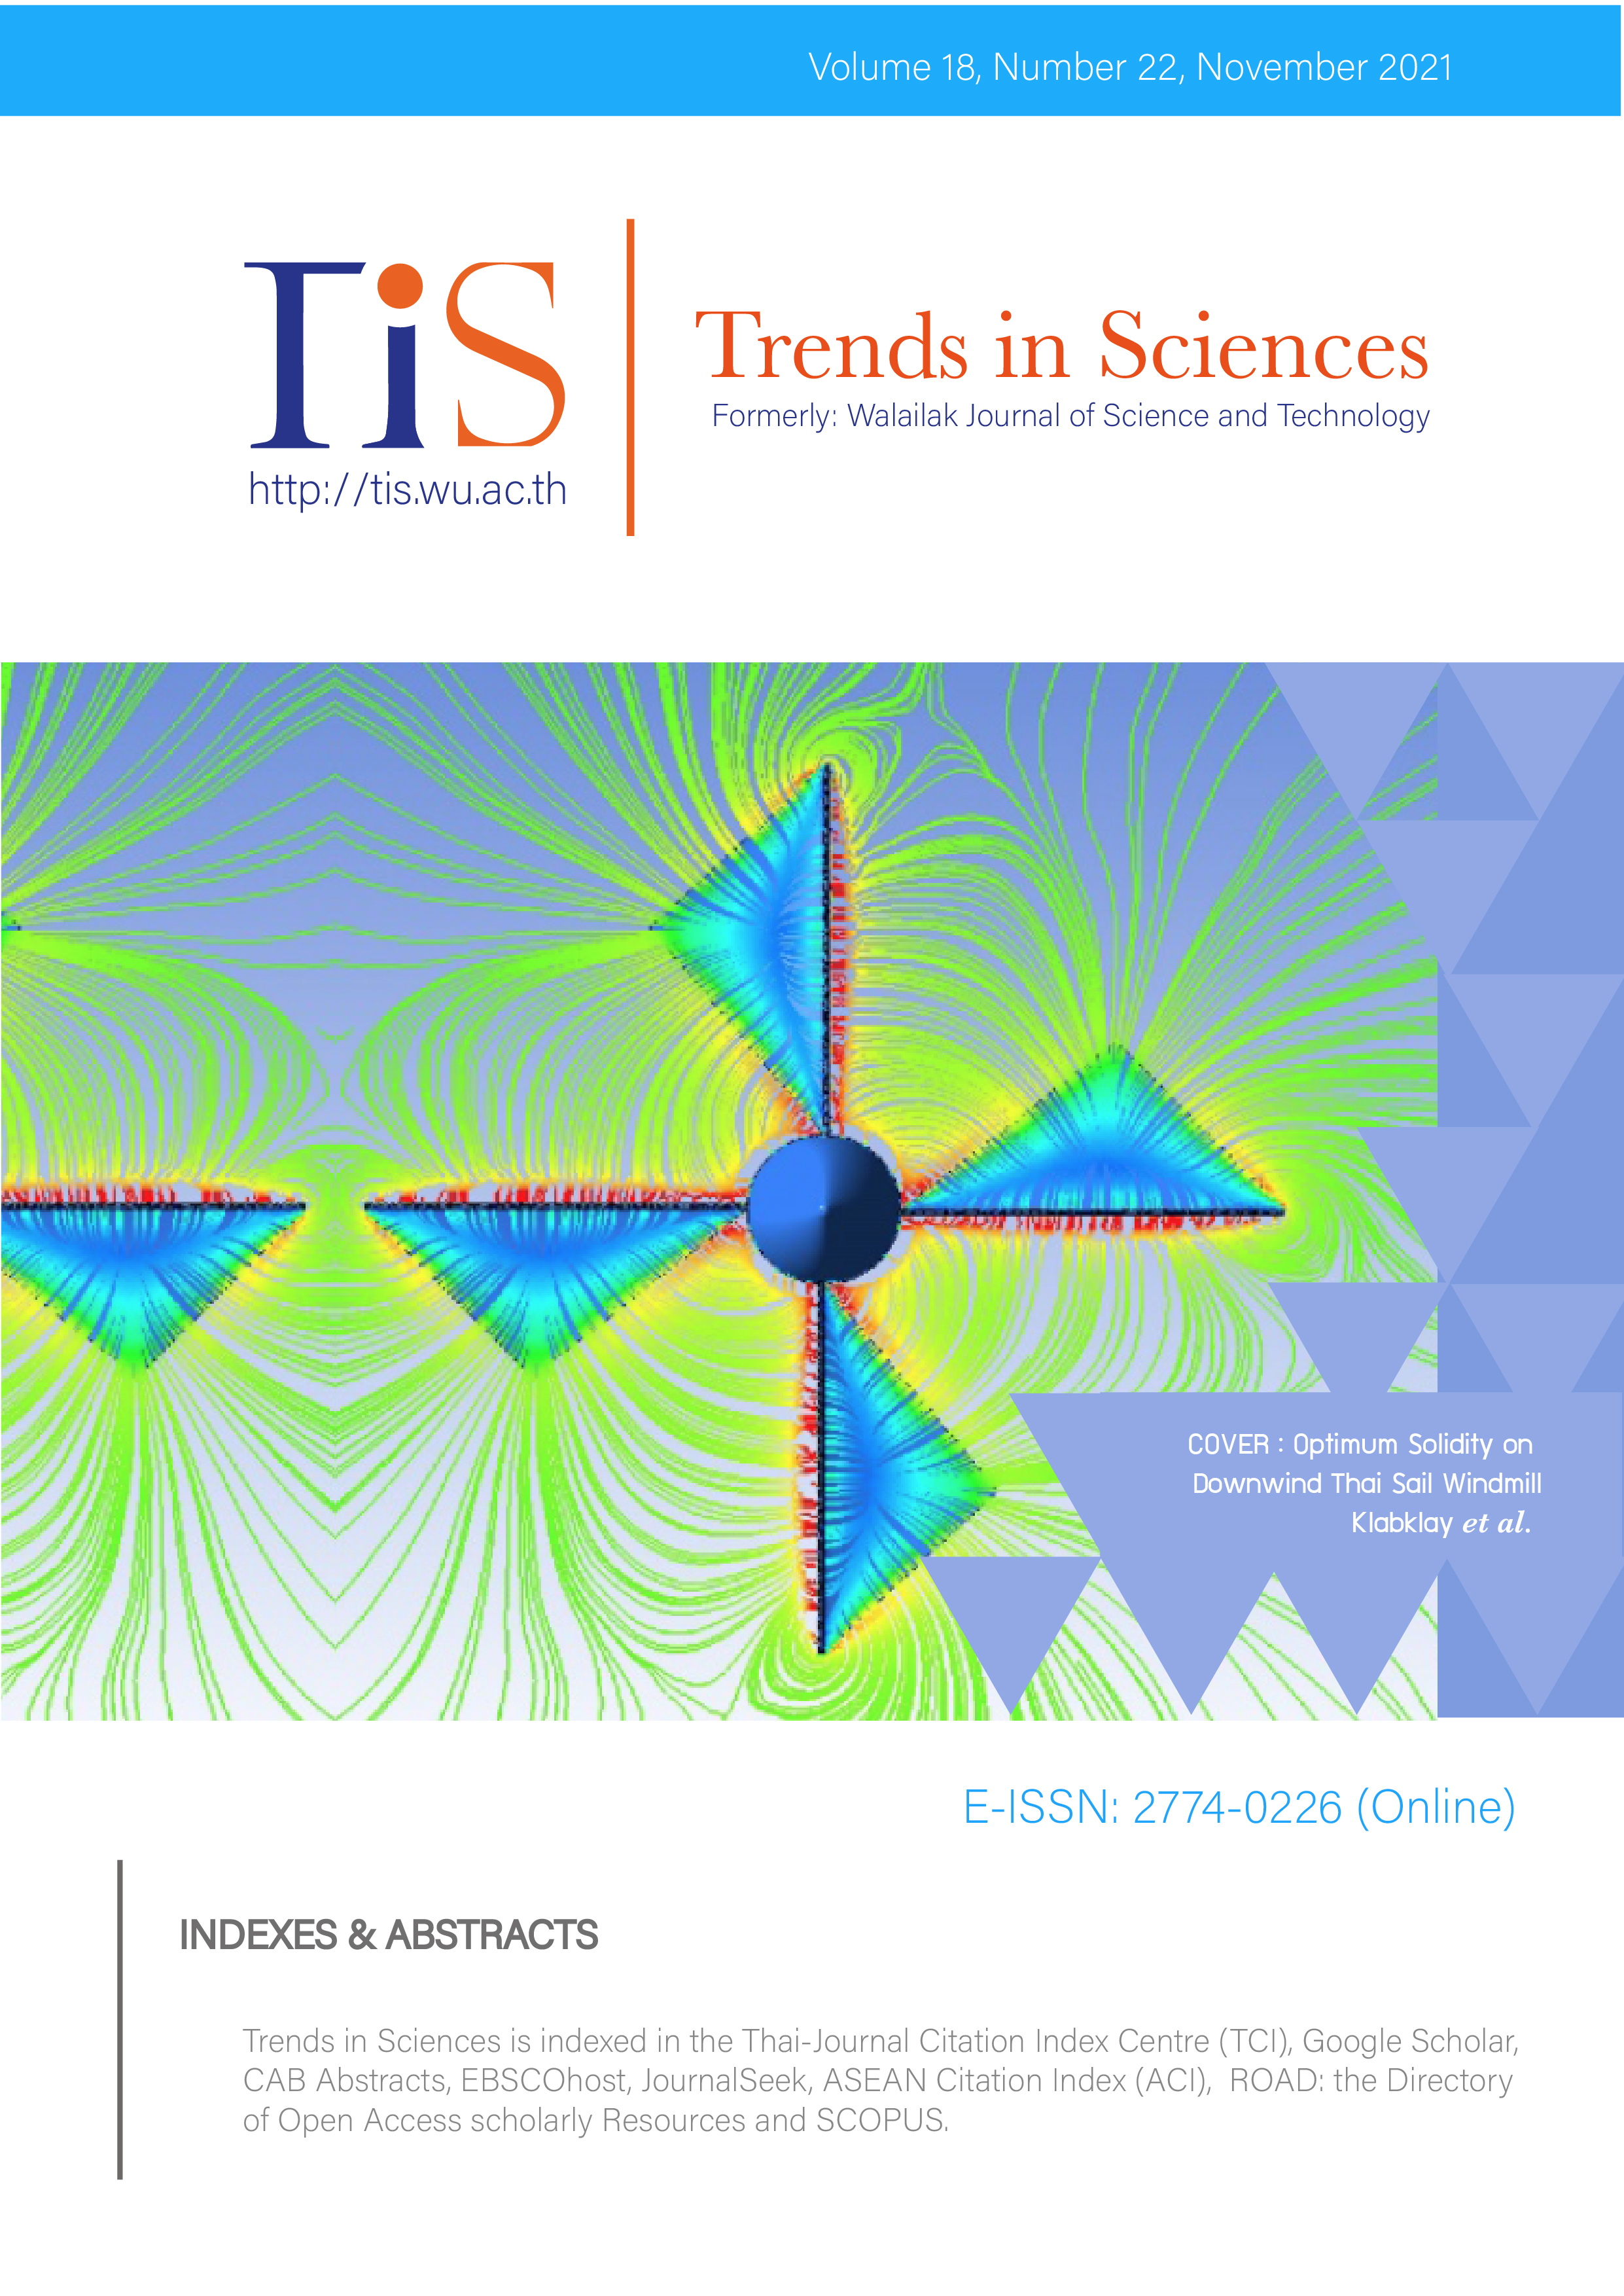 					View Vol. 18 No. 22 (2021): Trends in Sciences, Volume 18, Number 22, 15 November 2021
				